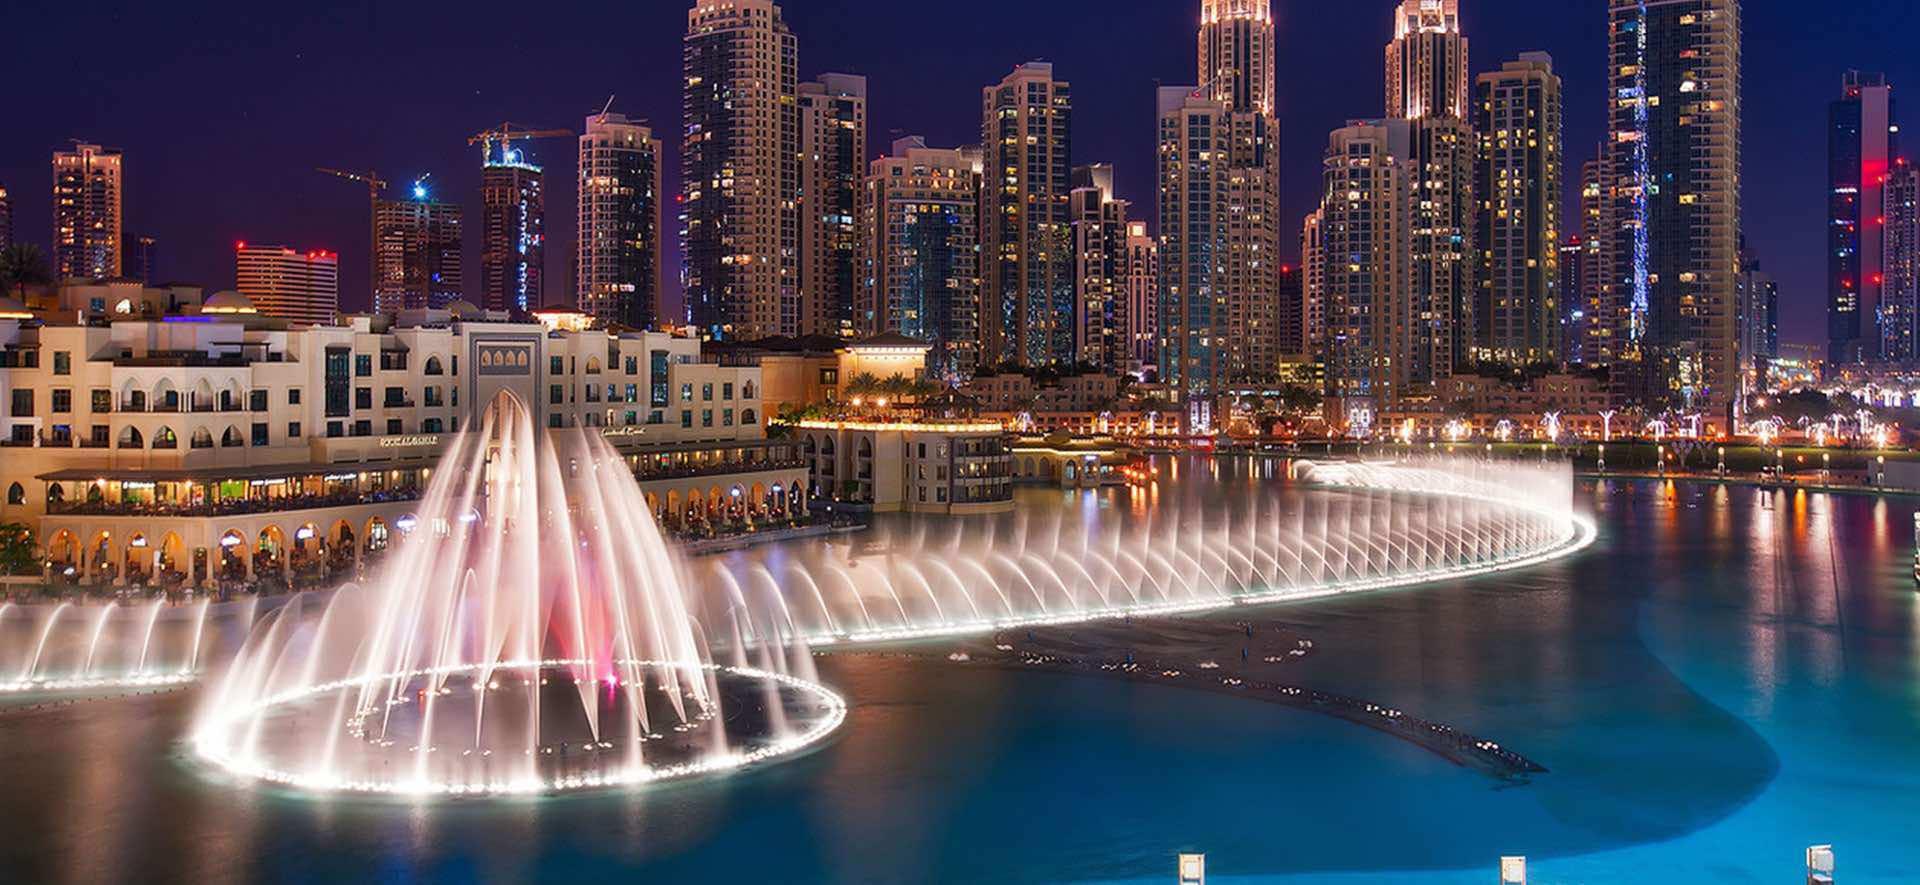 5 - Dubai Fountain